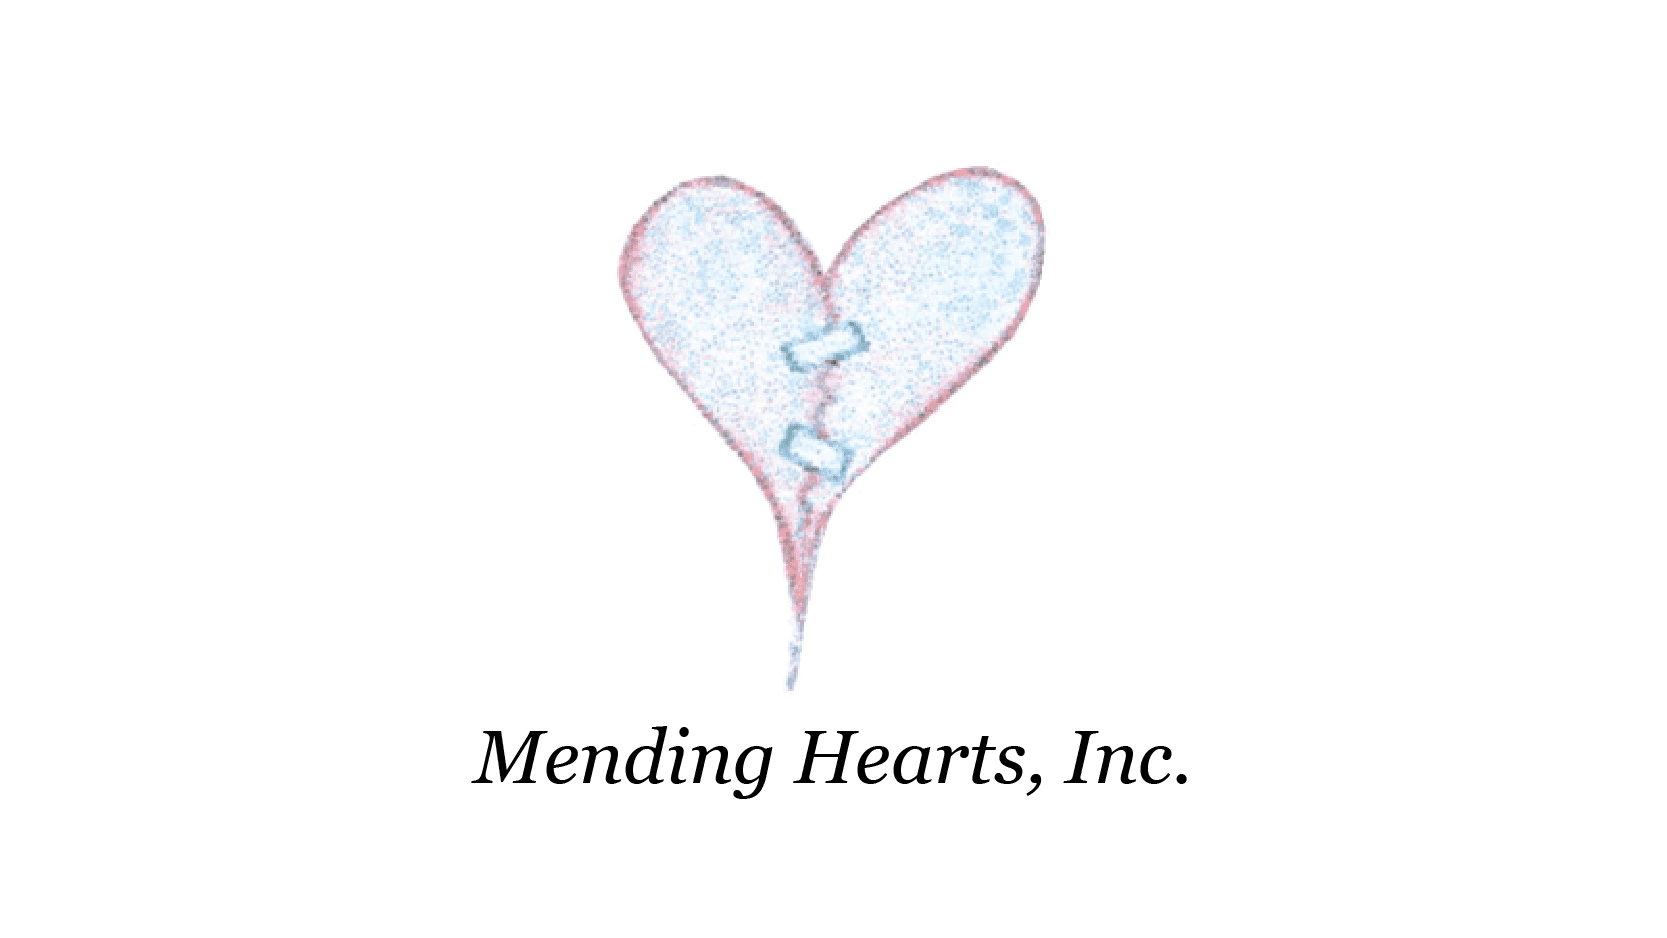 Mending Hearts, Inc. logo